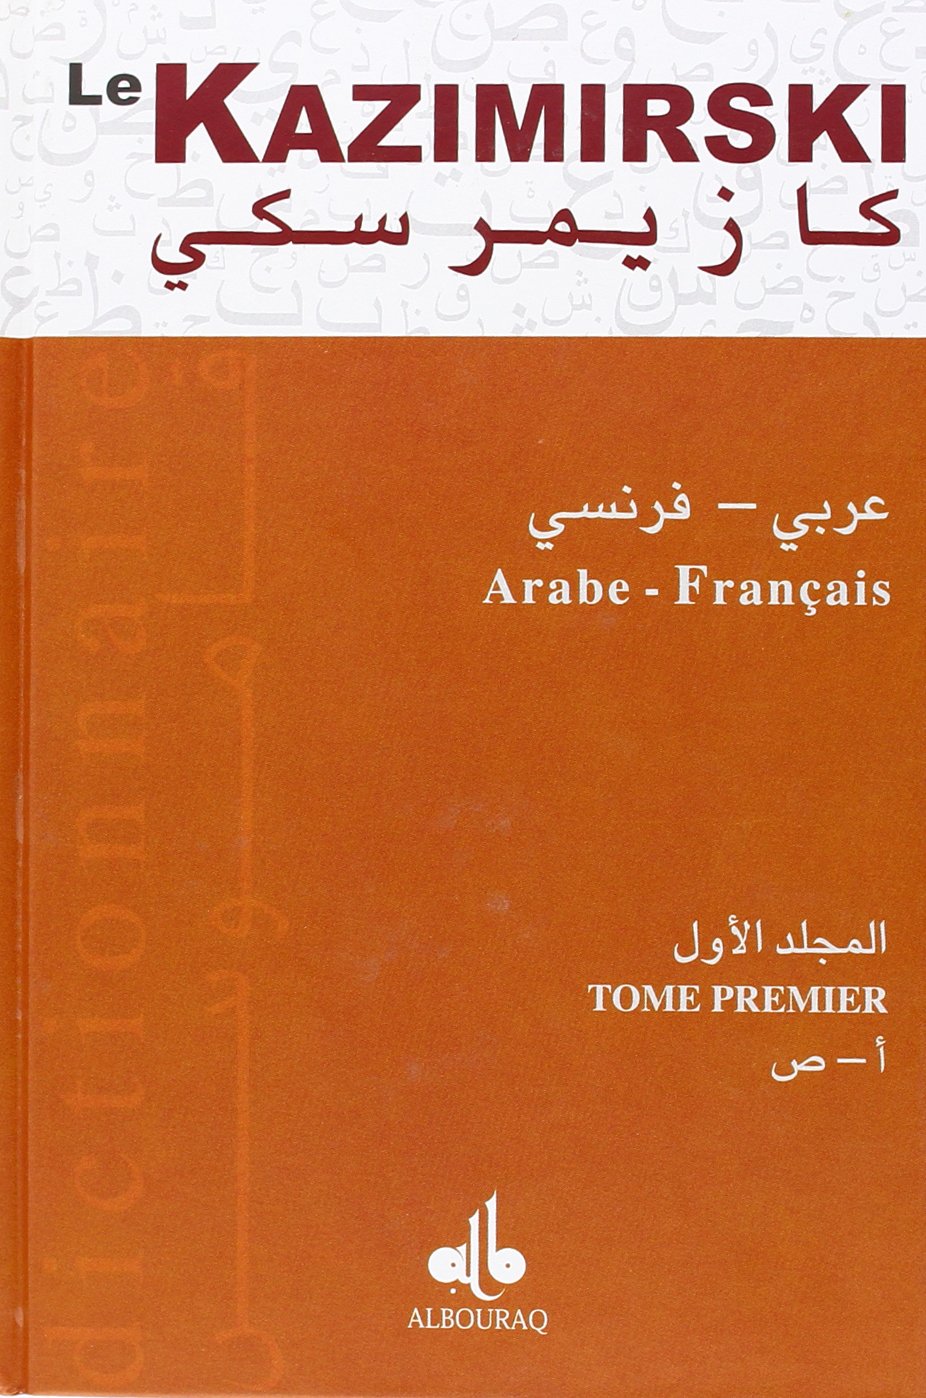 le-kazimirski-2-tomes-dictionnaire-arabe-francais-kazimirski-de-biberstein-a